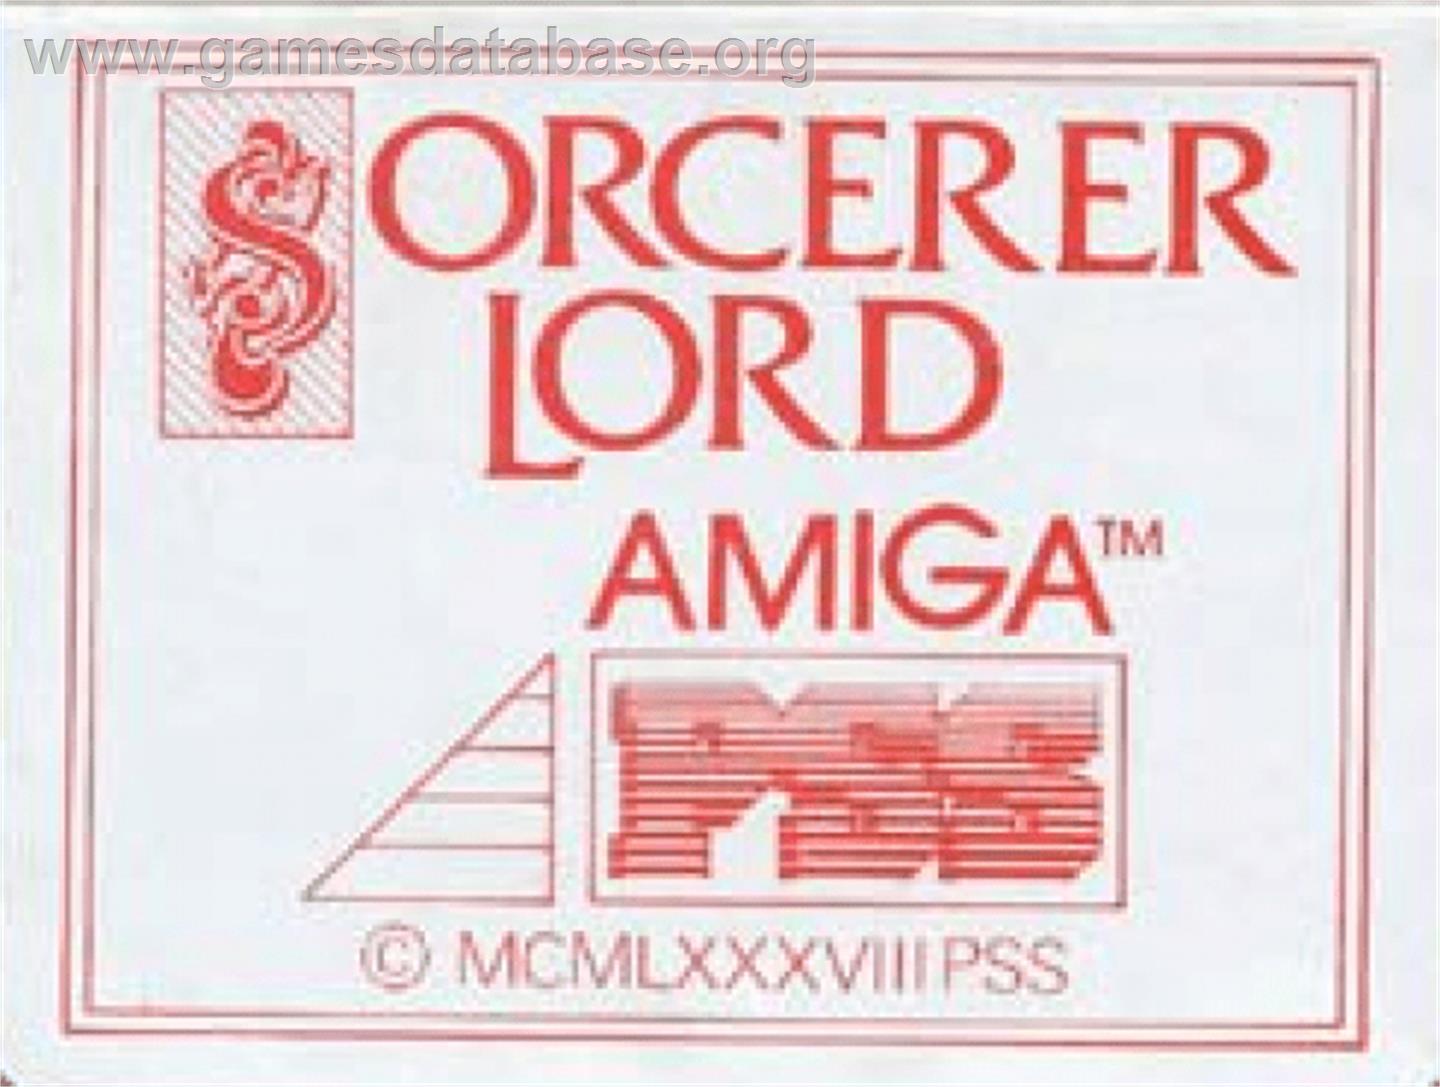 Sorcerer Lord - Commodore Amiga - Artwork - Cartridge Top